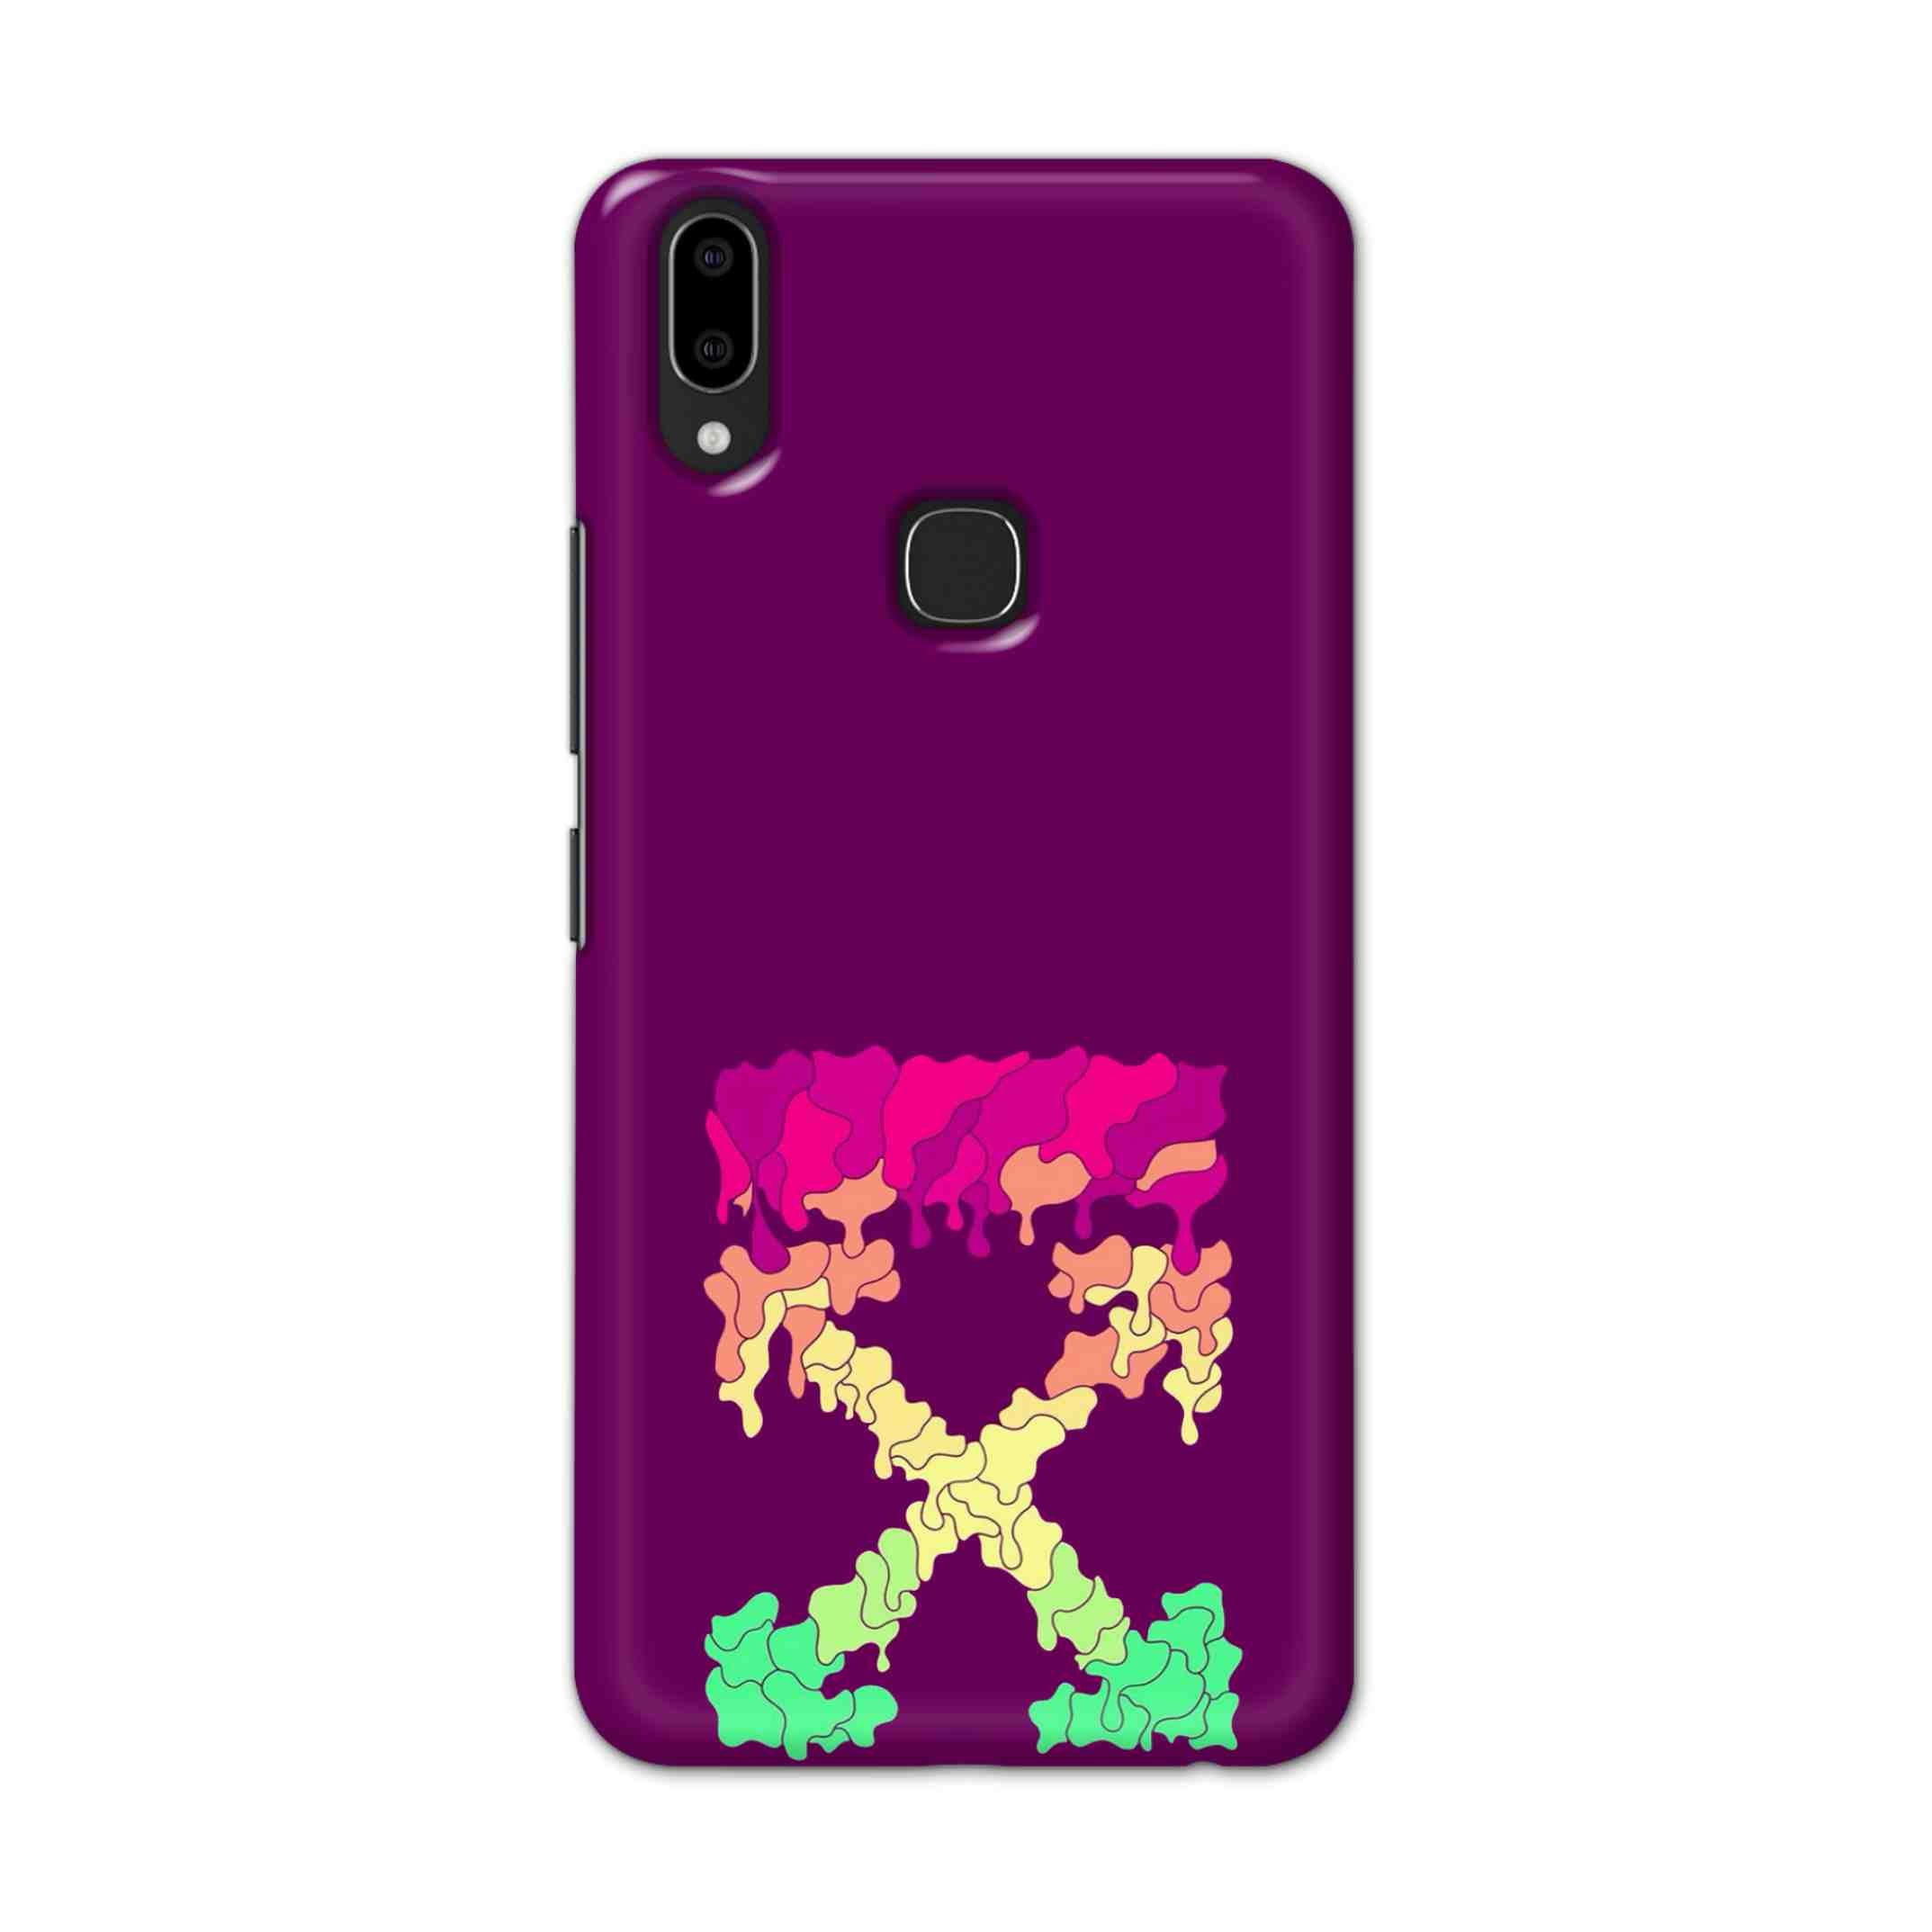 Buy X.O Hard Back Mobile Phone Case Cover For Vivo V9 / V9 Youth Online